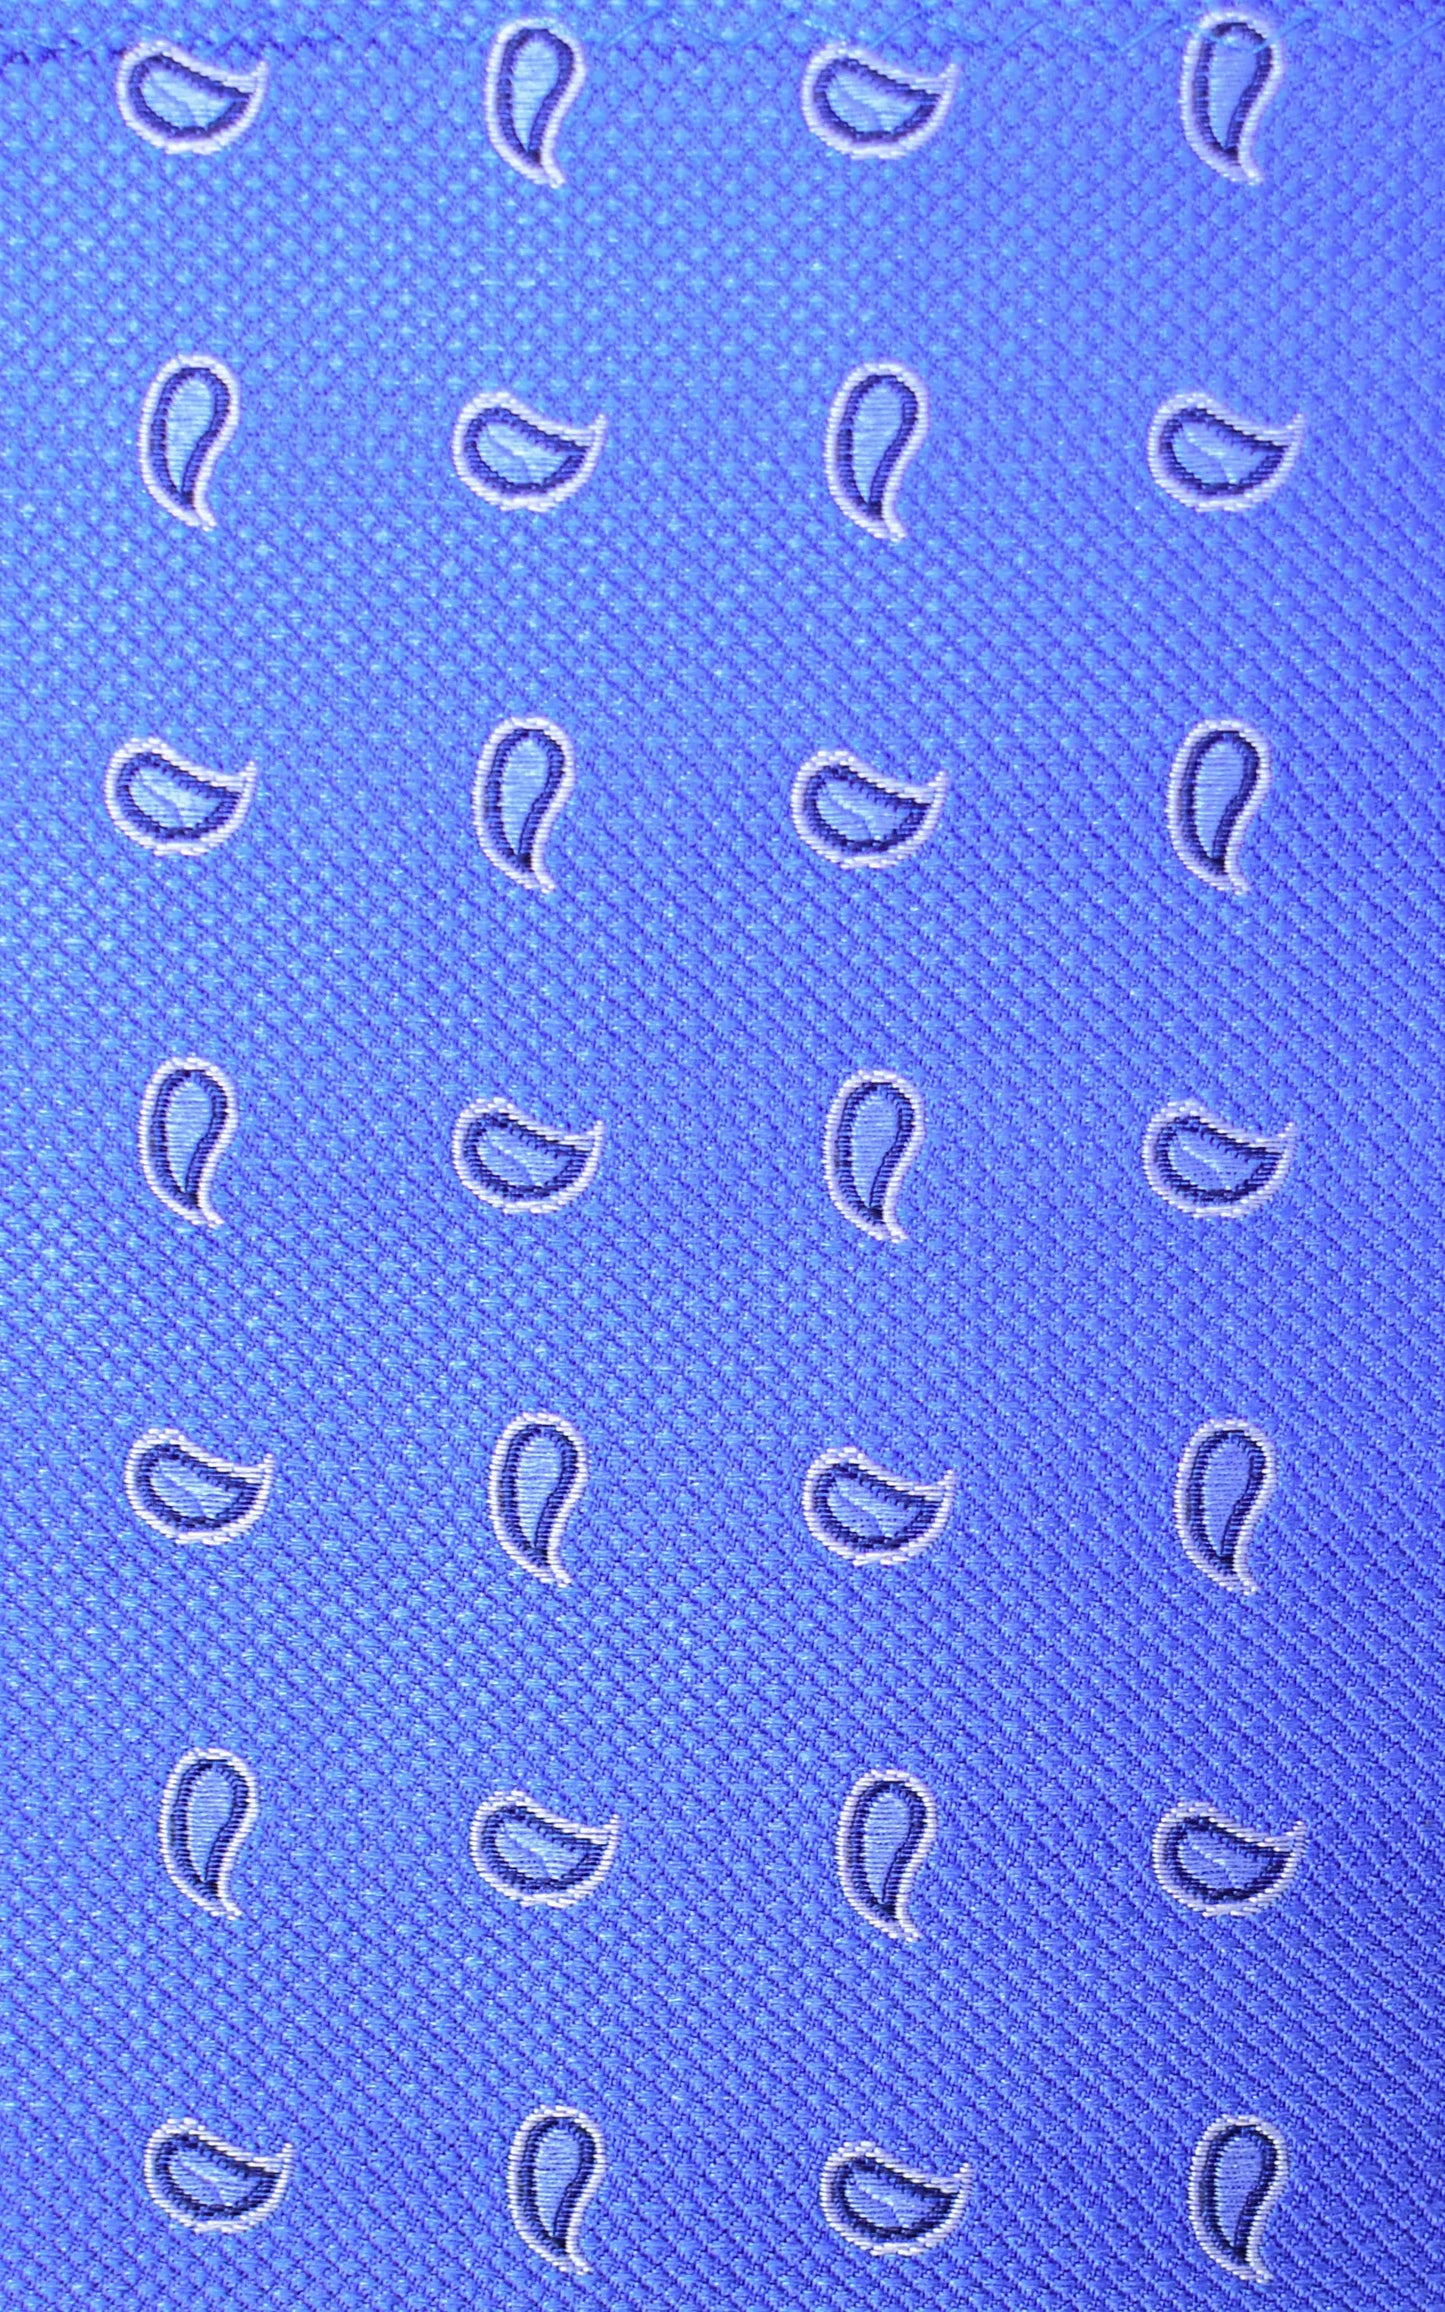 Knightsbridge Neckwear Paisley Silk Tie - Blue From Woven Durham